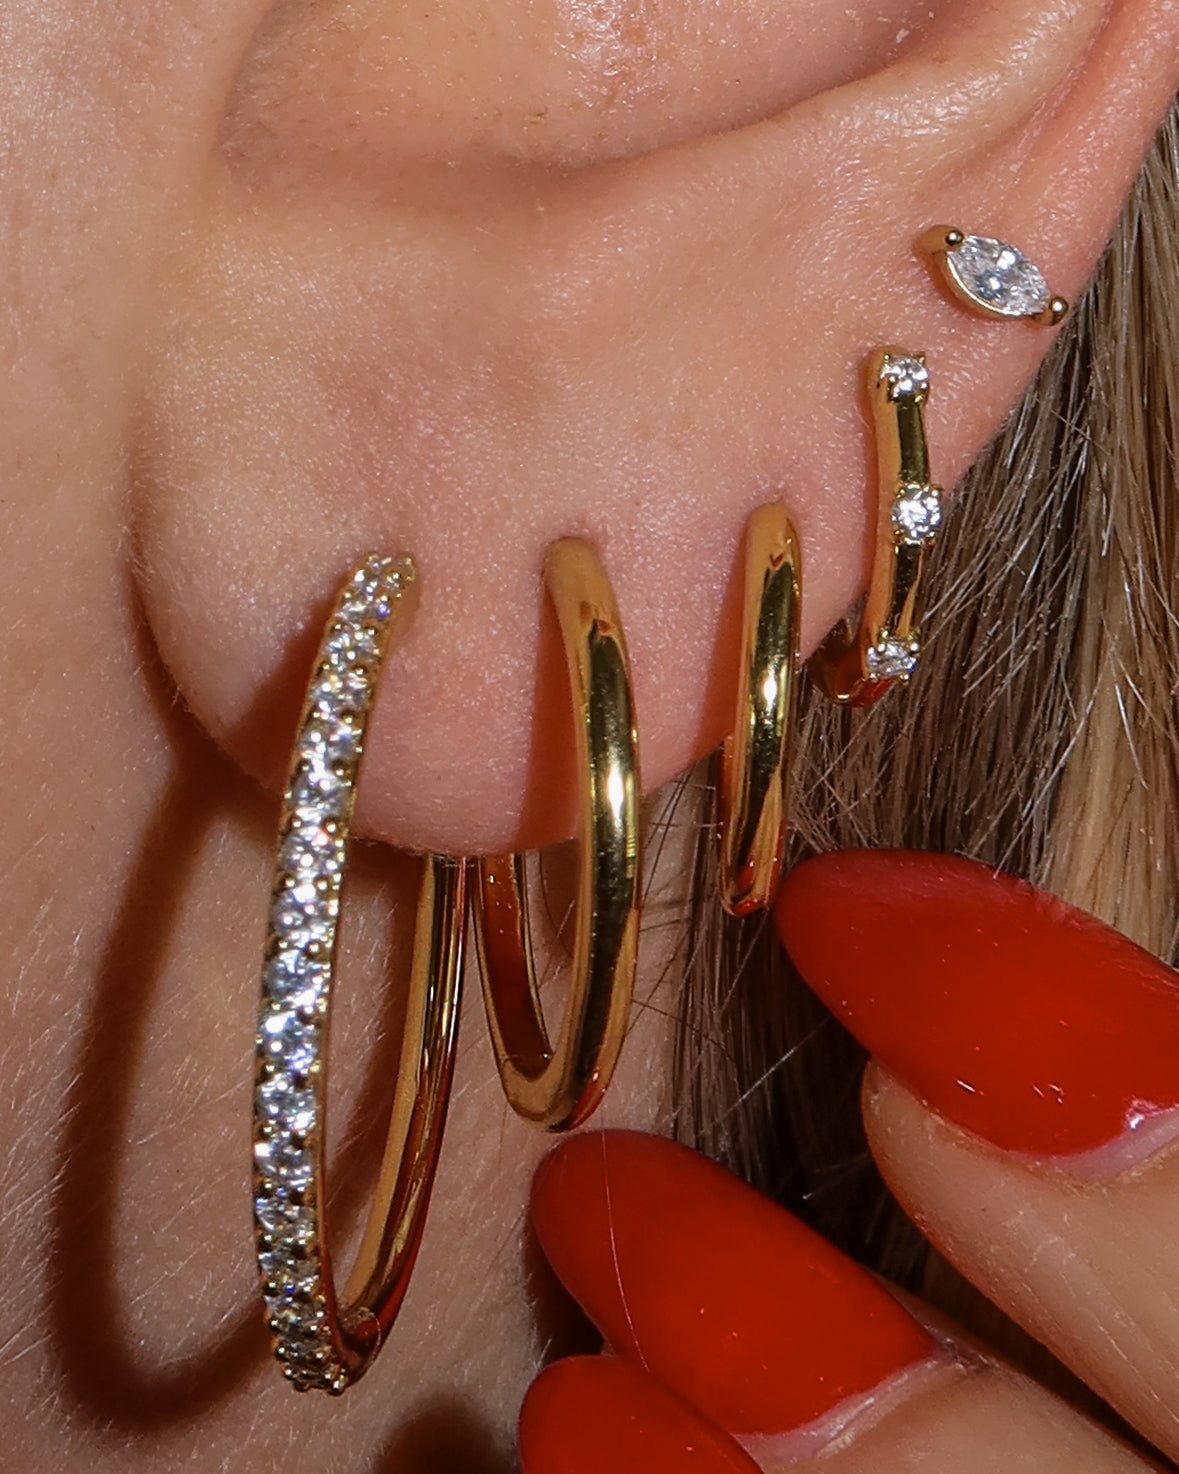 Amanda earrings - five and two jewelry